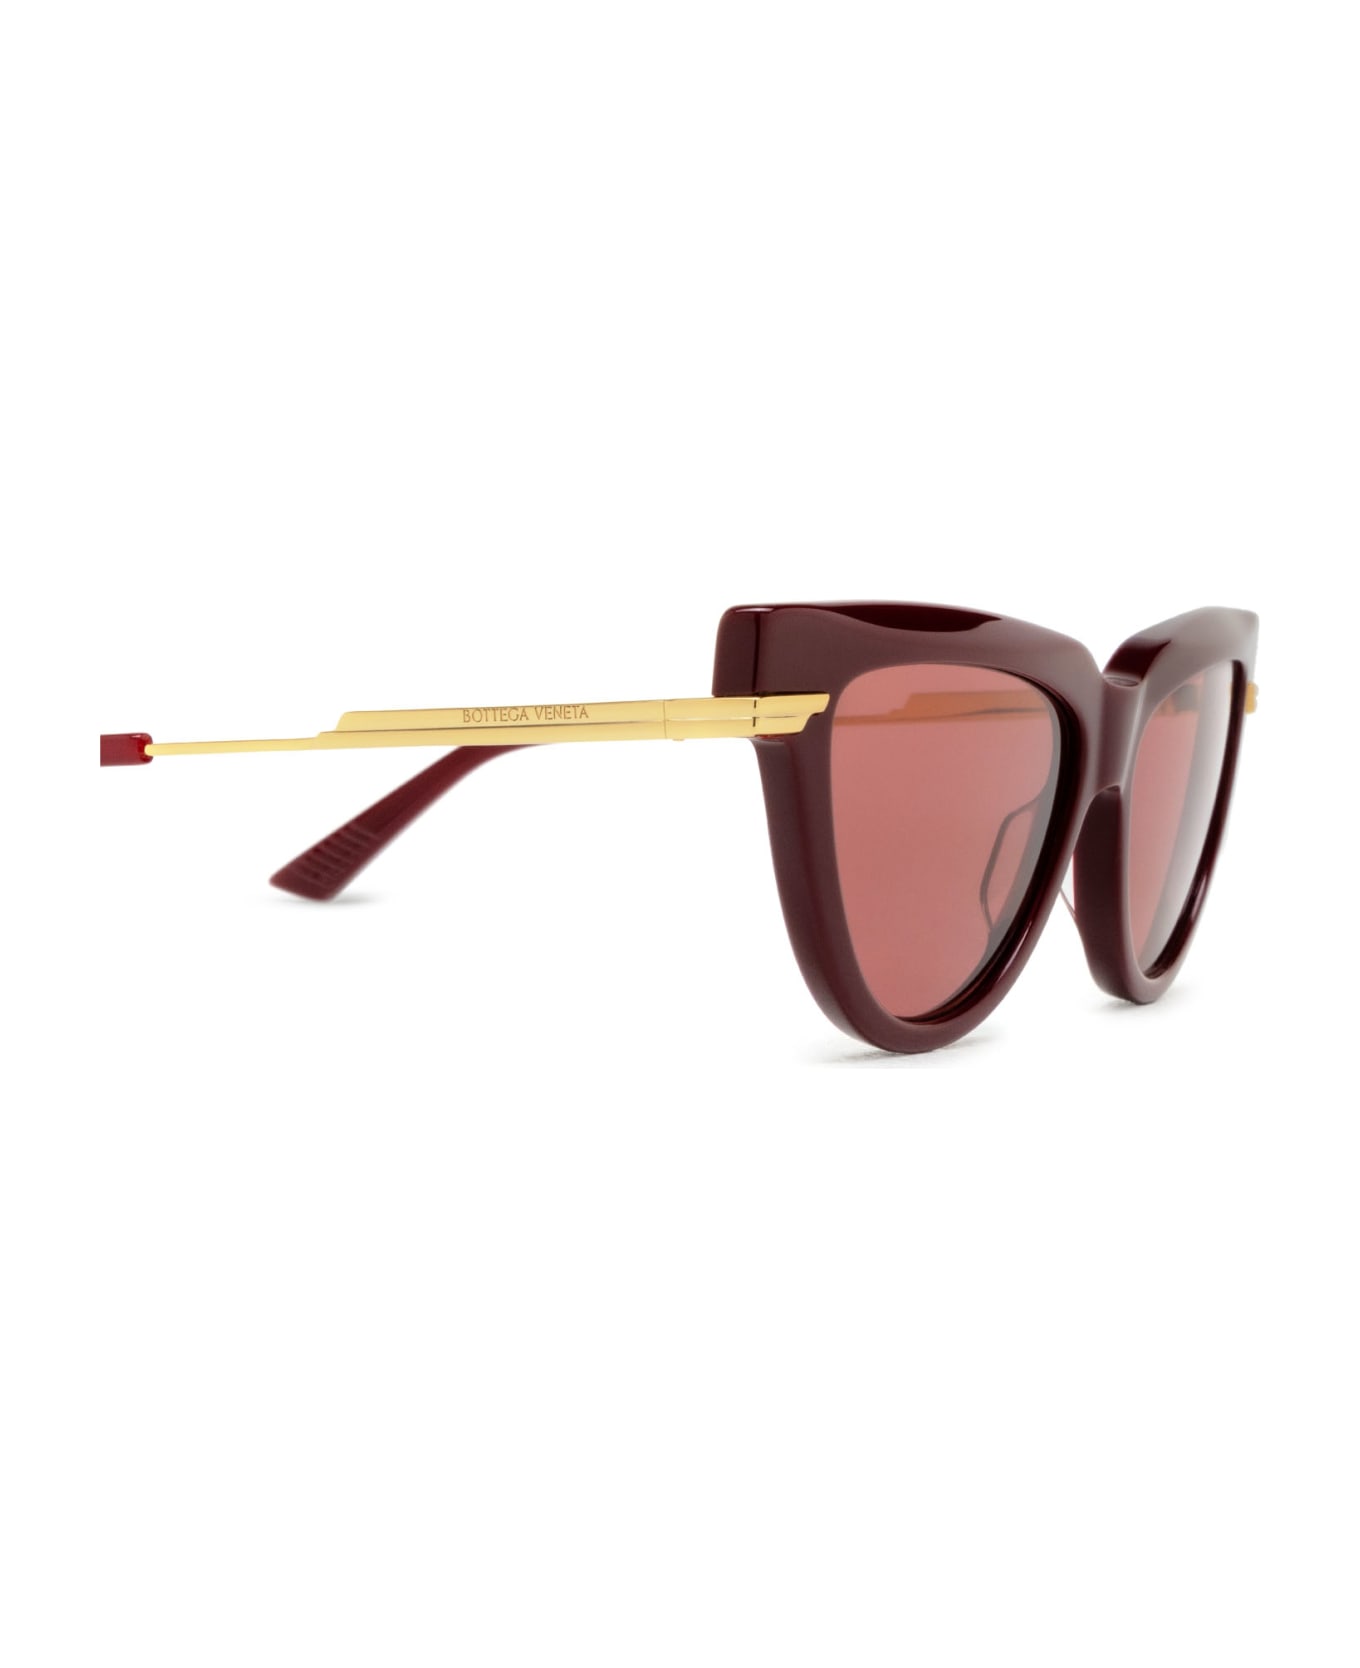 Bottega Veneta Eyewear Bv1265s Burgundy Sunglasses - Burgundy